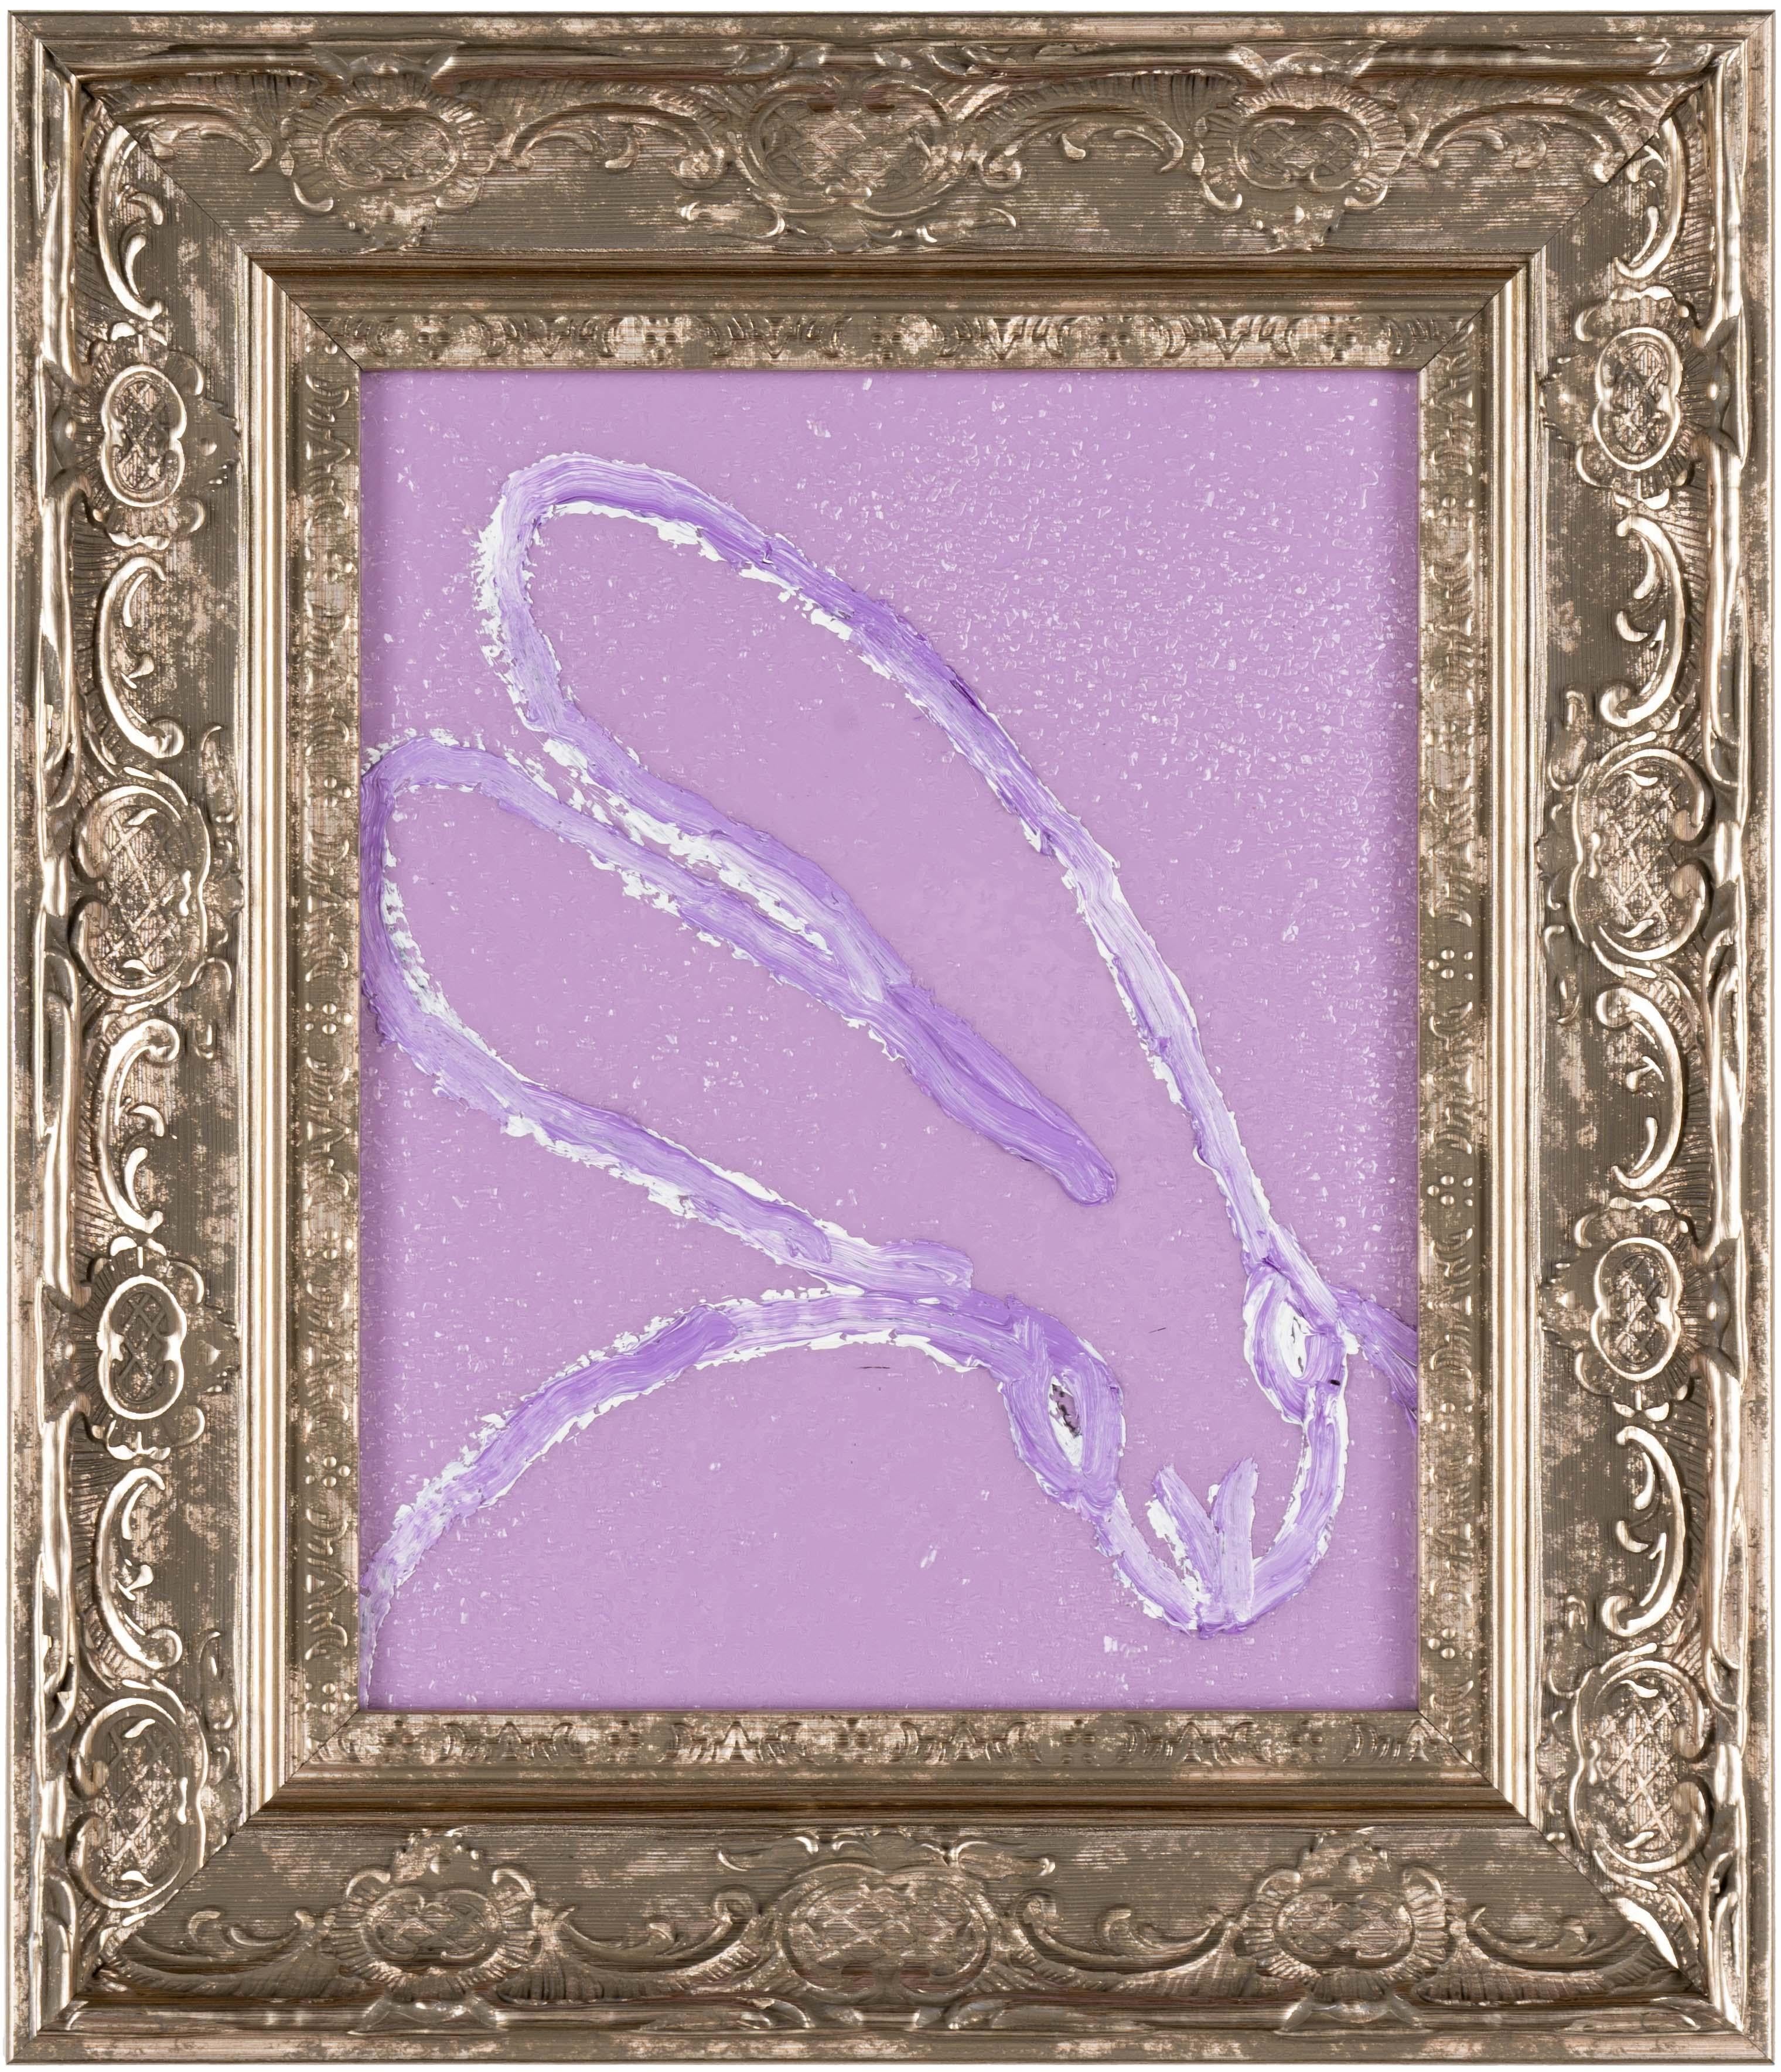 Hunt Slonem "Lilac" Purple Diamond Dust Bunny
A light purple gestured bunny on a lilac diamond dust background. Framed in a vintage frame.

Unframed: 10 x 8 inches
Framed: 14.5 x 12.5 inches
*Painting is framed - Please note Hunt Slonem paintings